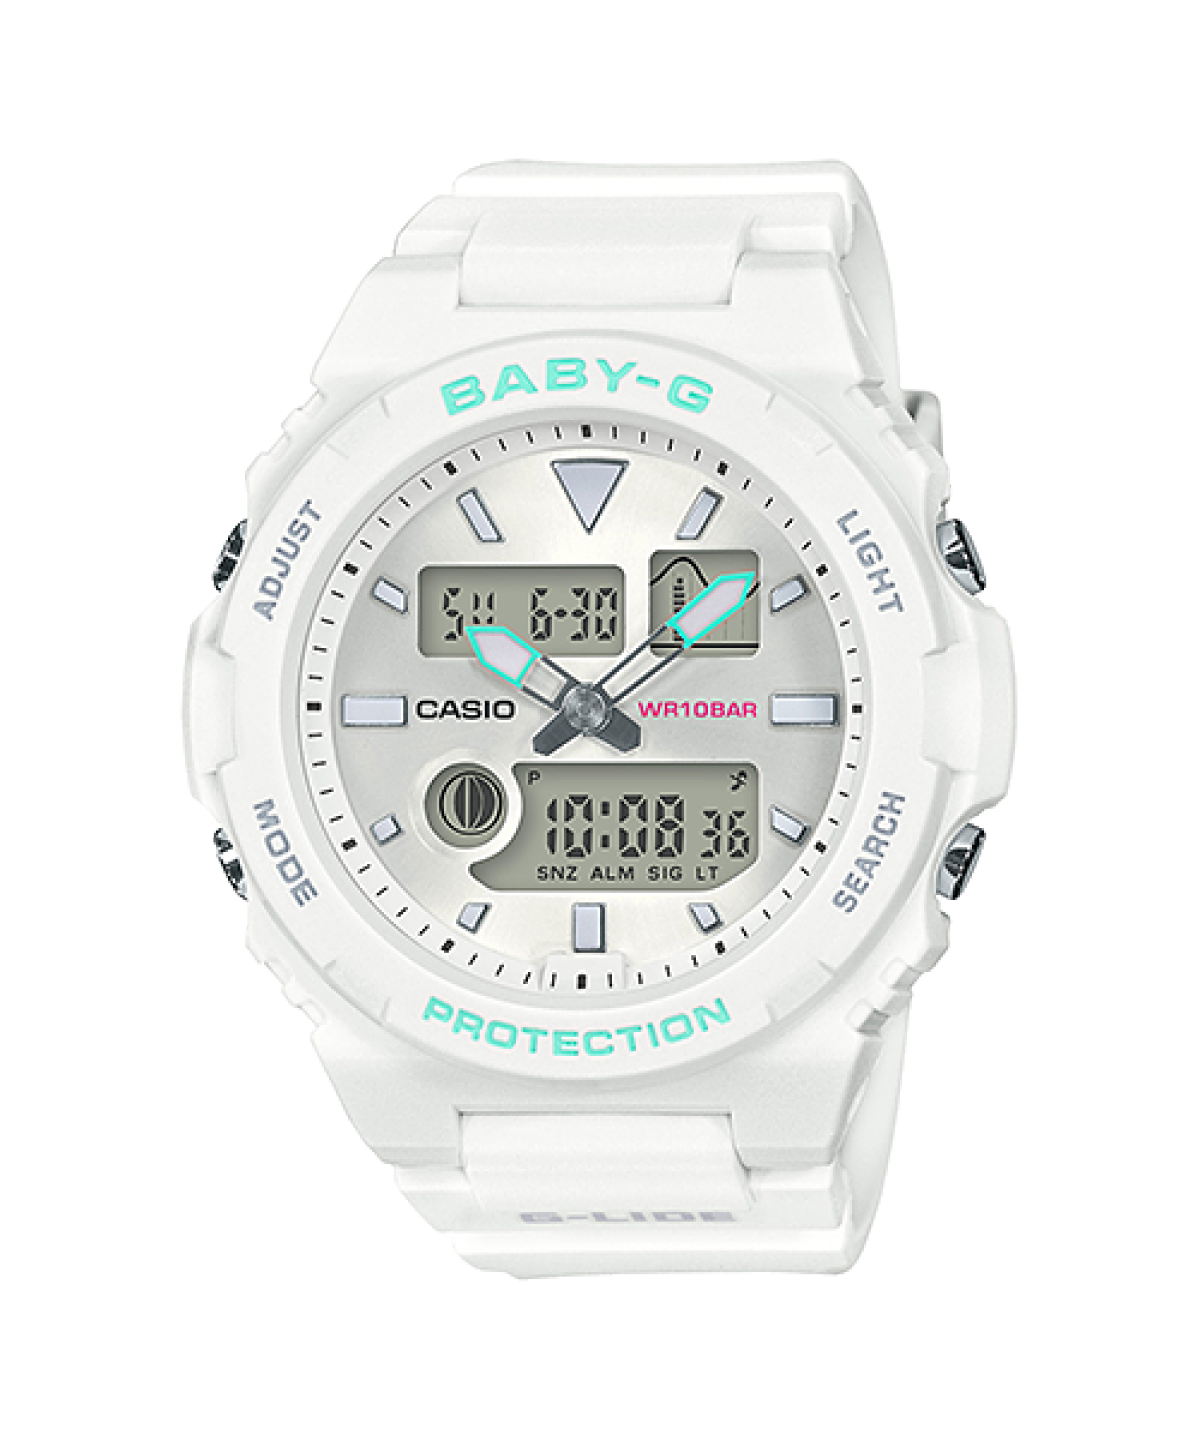 BABY-G BAX-100-7A 手表 白色 #1